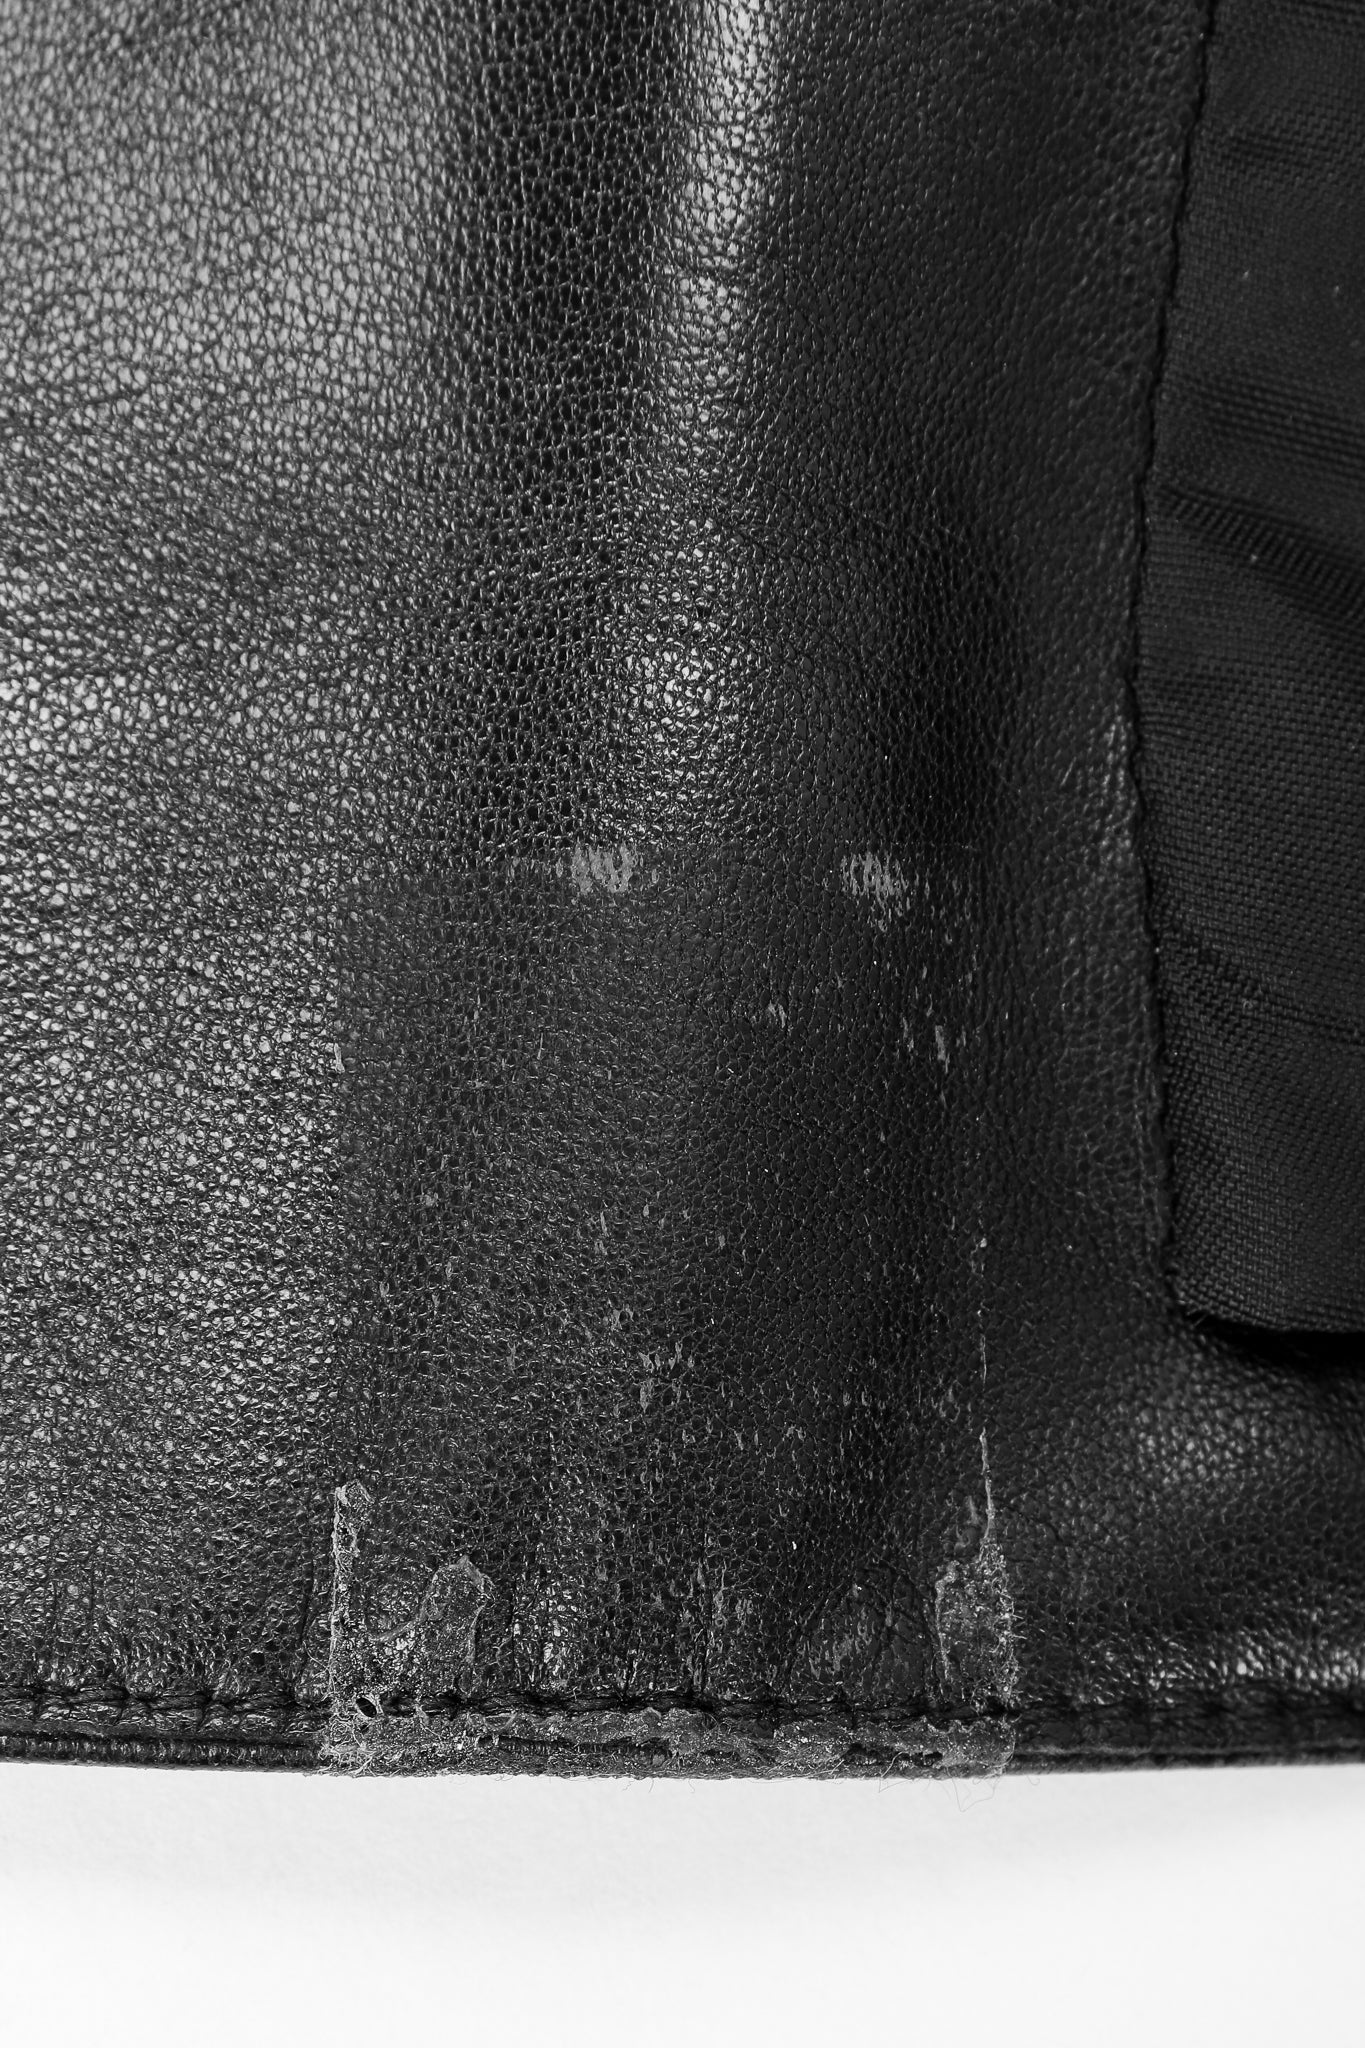 Recess Vintage Pat Hicks Calf Hair Trim Black Leather Trench Coat, Residue 3